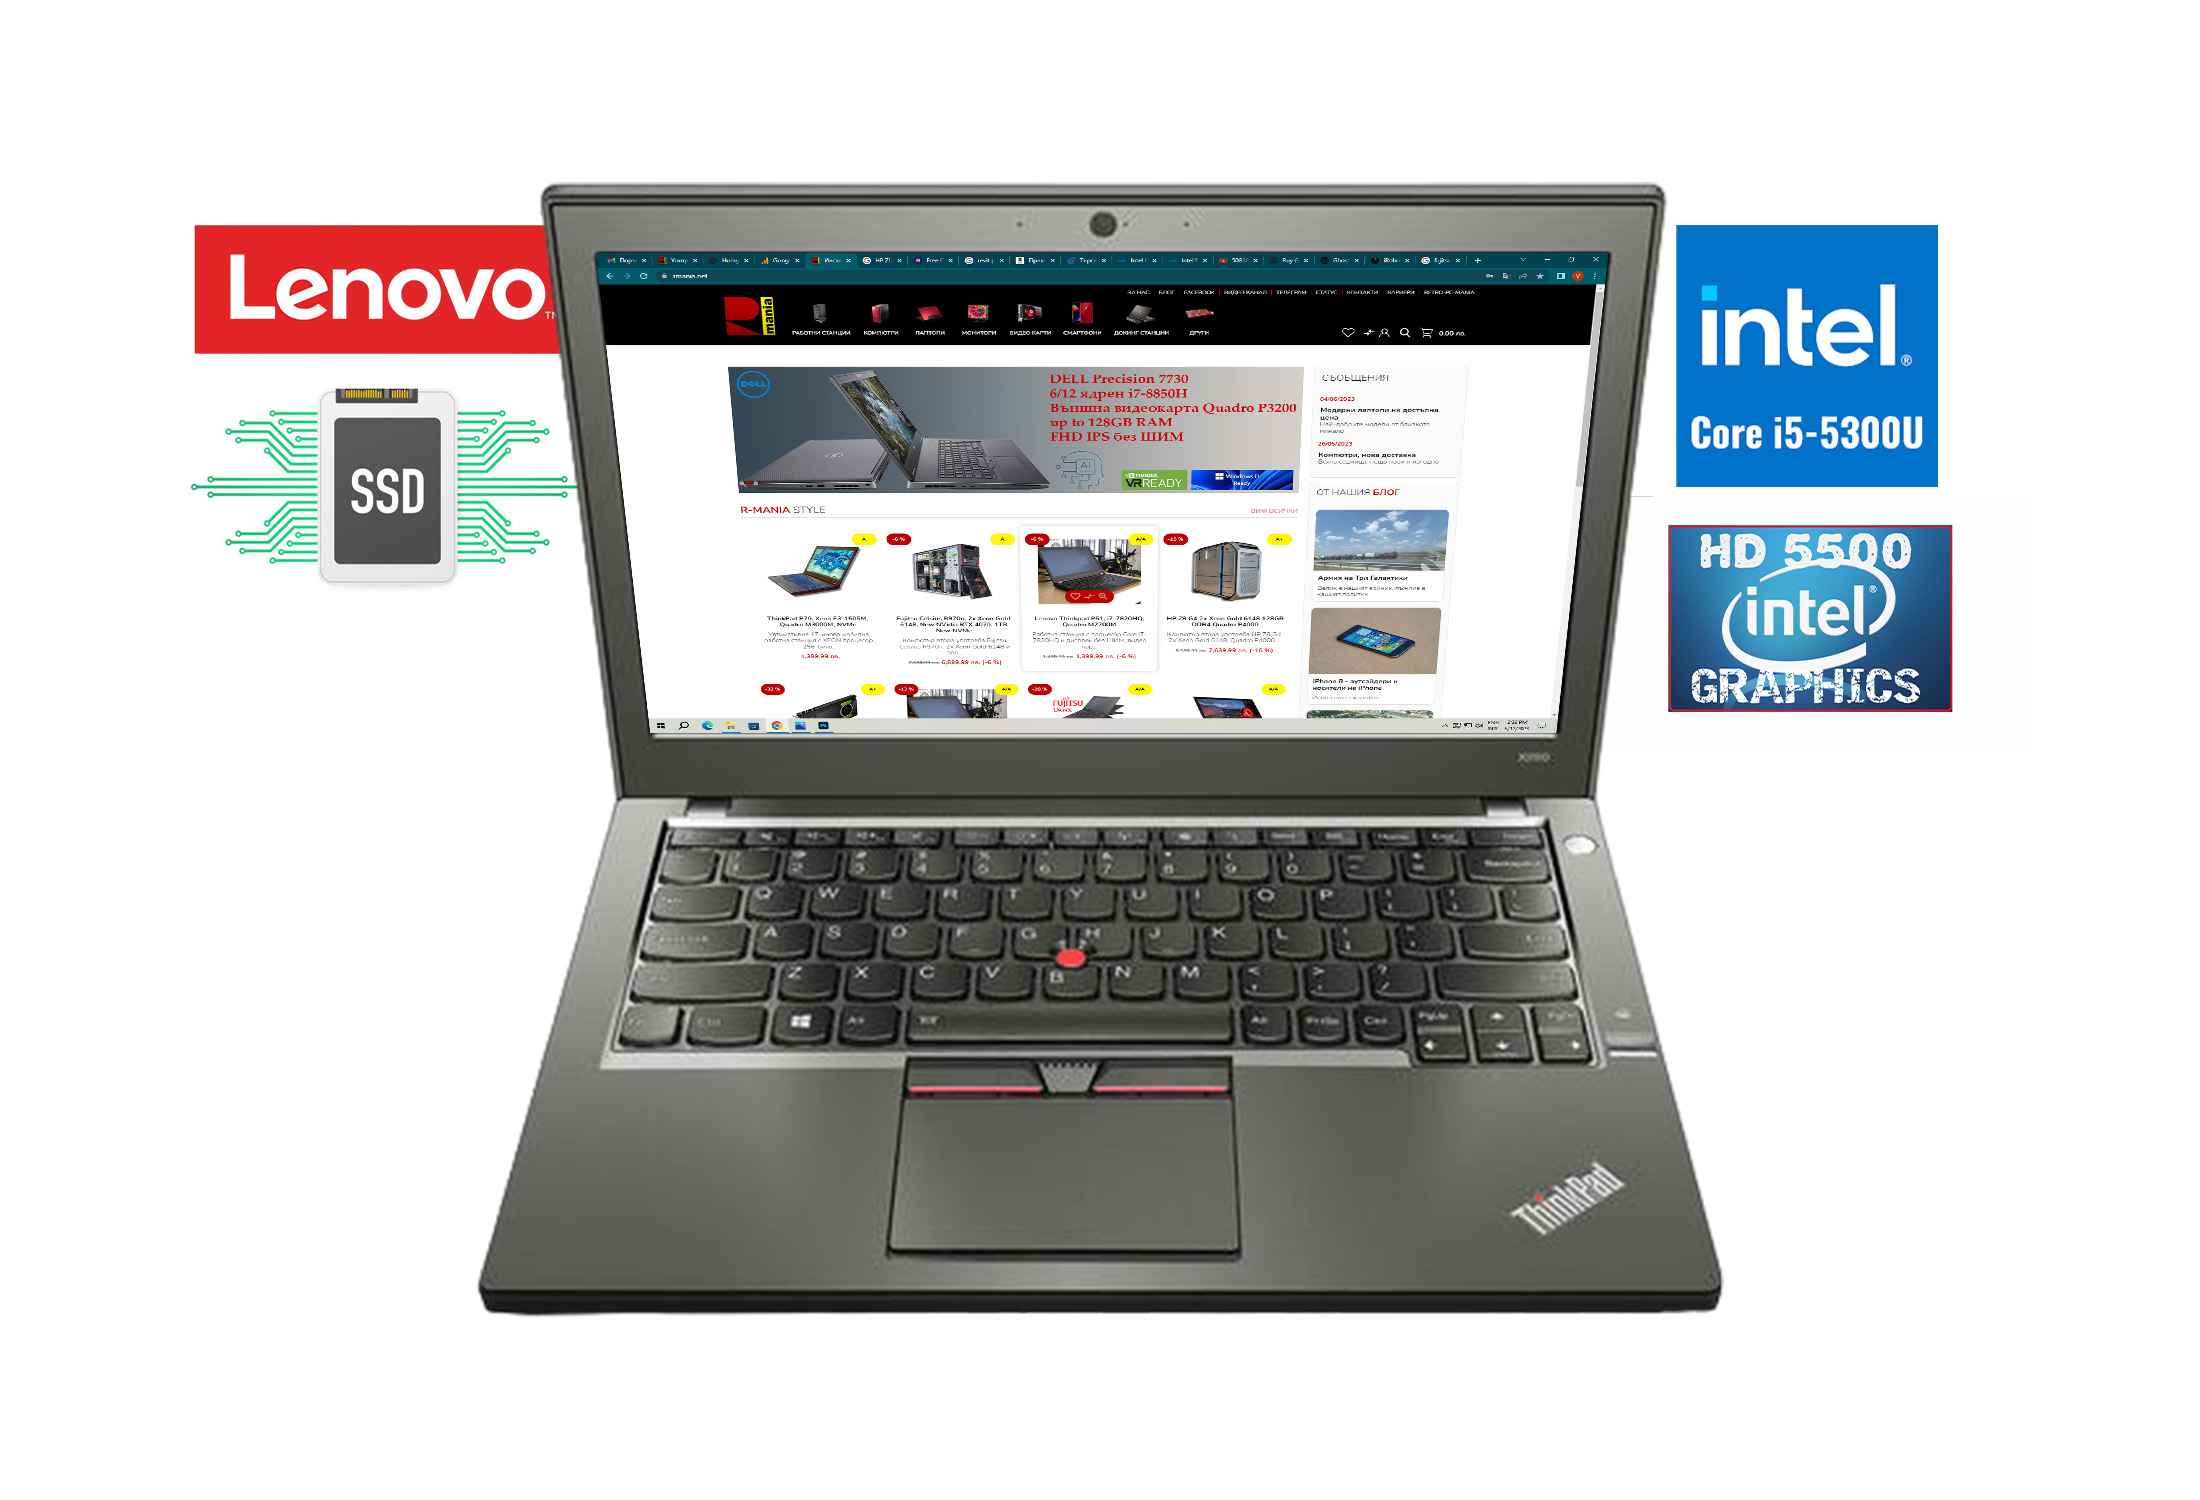 Lenovo Thinkpad X250 i5-5300U 8GB DDR3 180GB SSD Camera-7U53h.jpeg